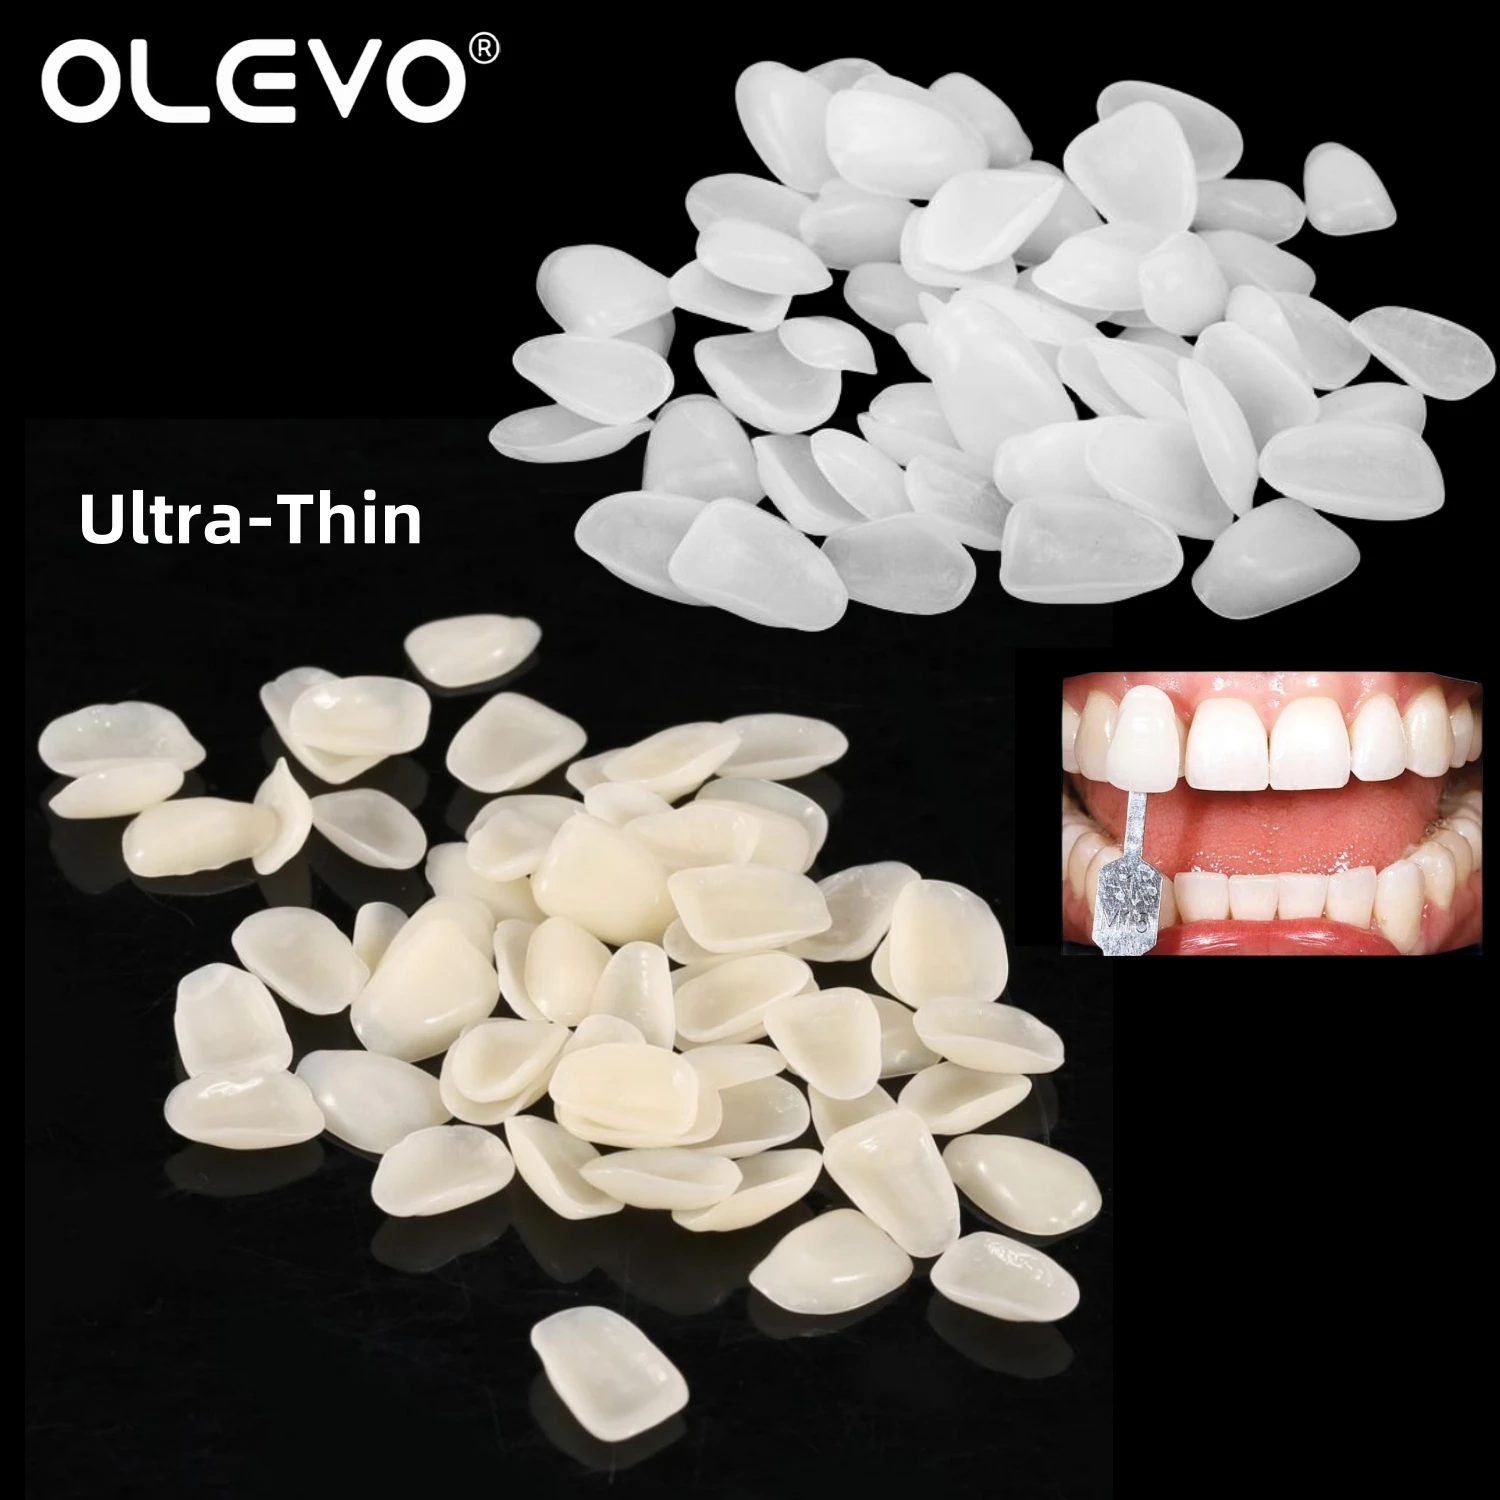 

50Pcs Dental Temporary Crown Ultra-Thin Resin Teeth Veneers Whitening Porcelain Upper Anterior Tooth Repair Dentistry Oral Care